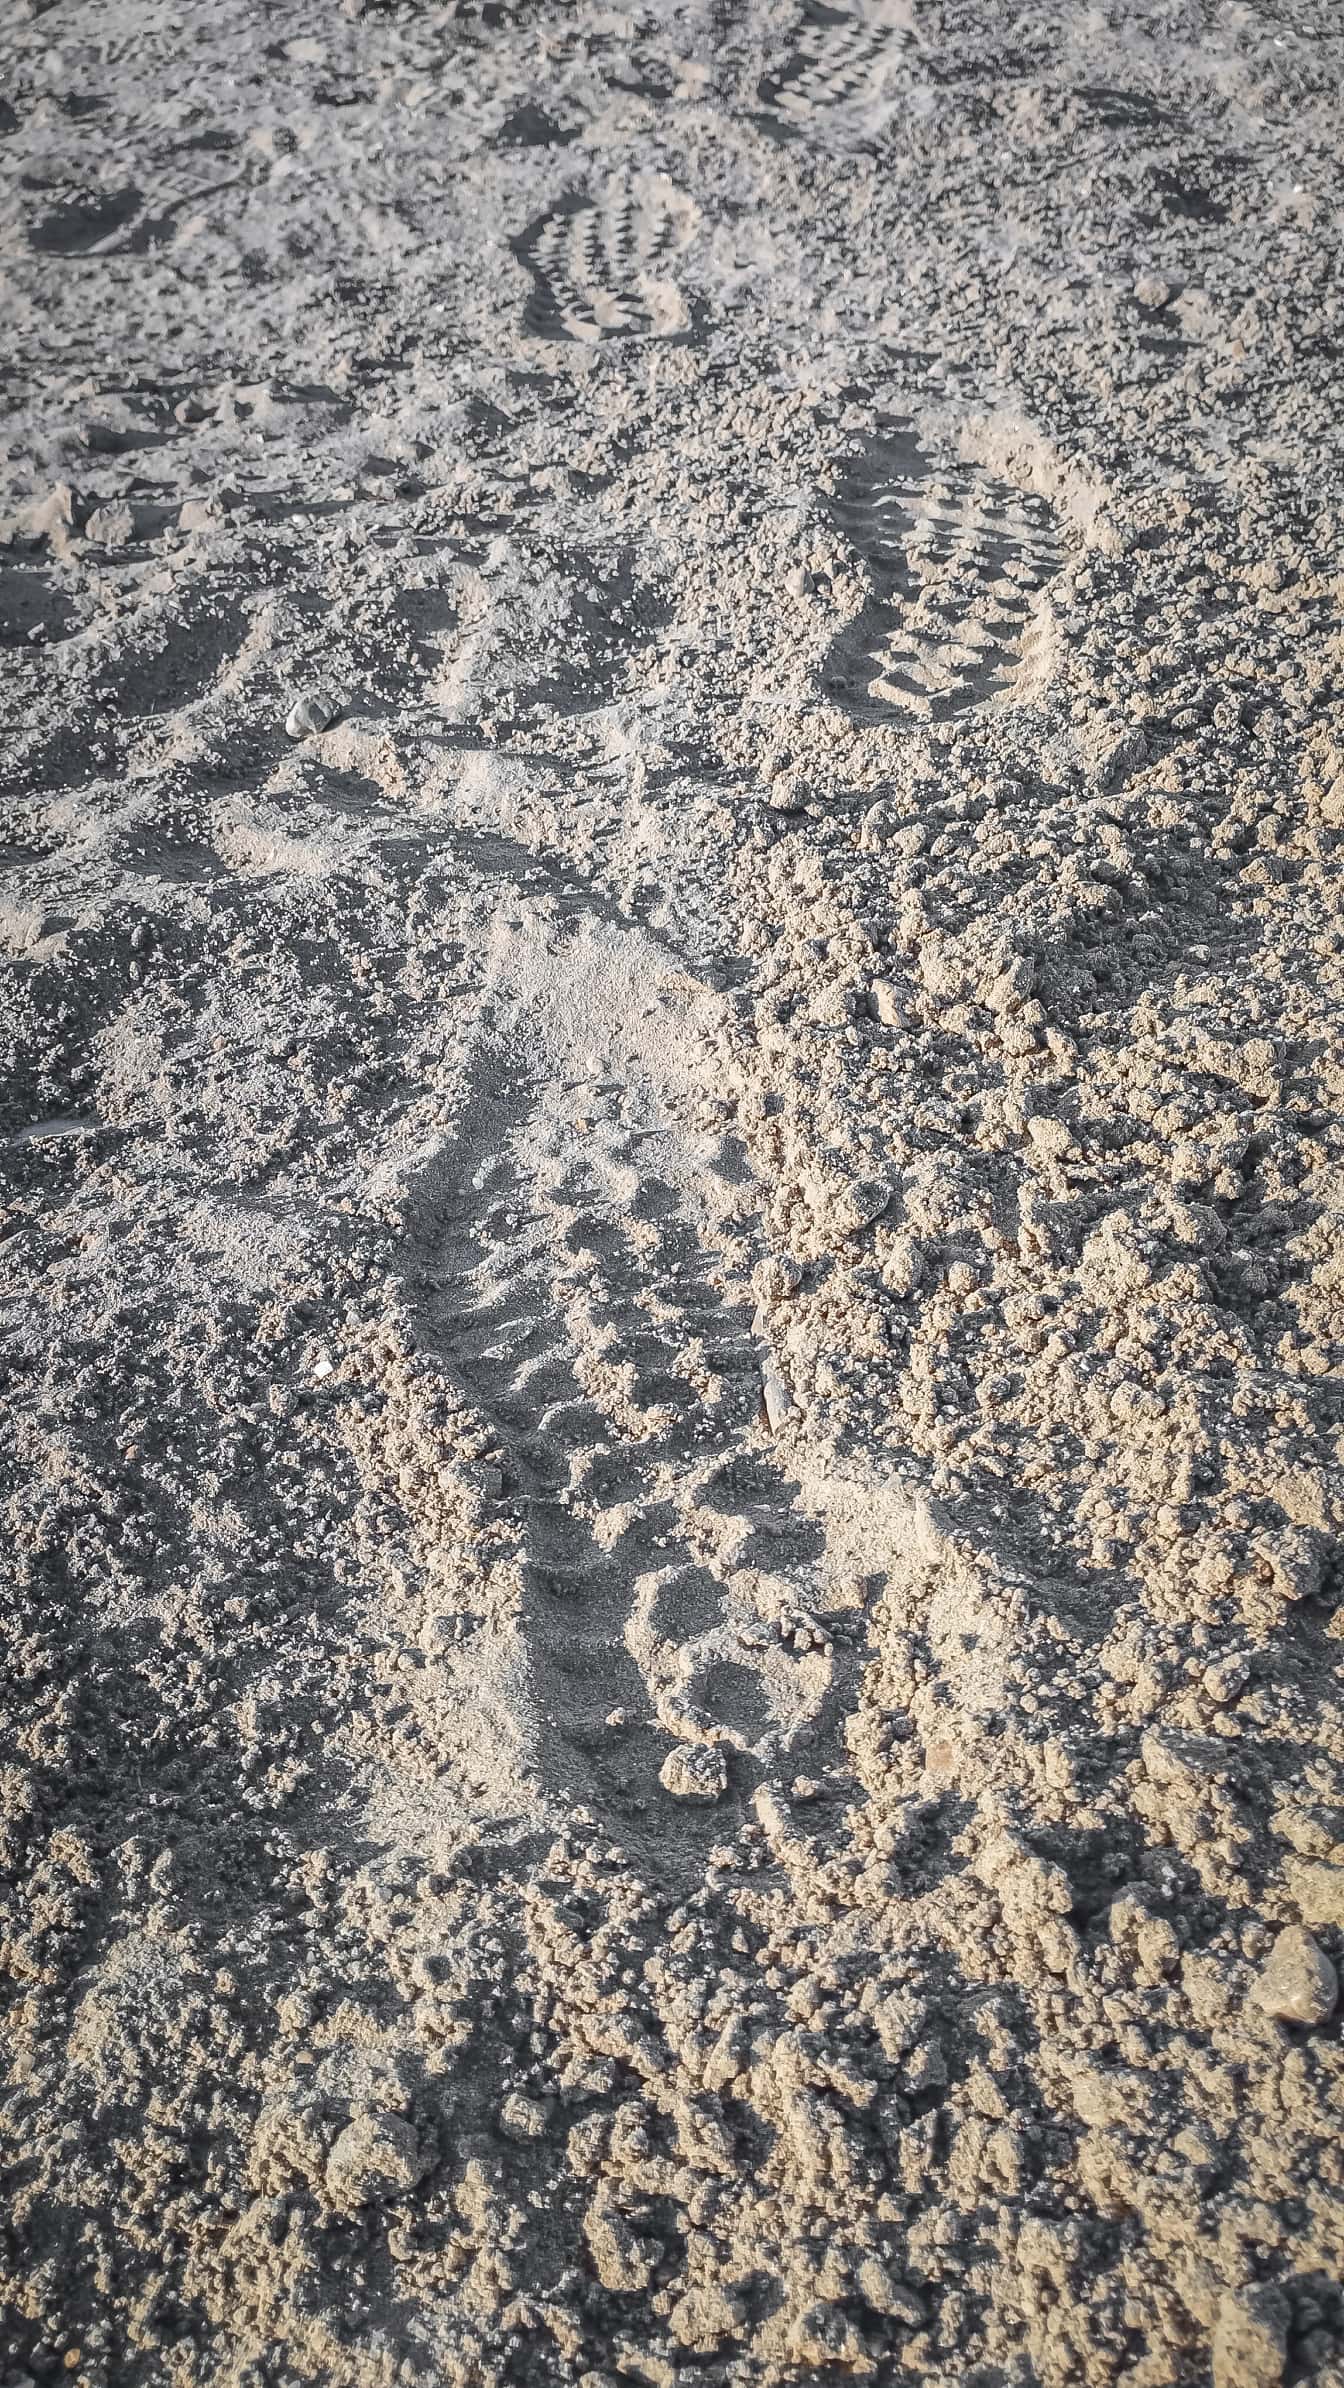 Nærbilleder i tørt sand